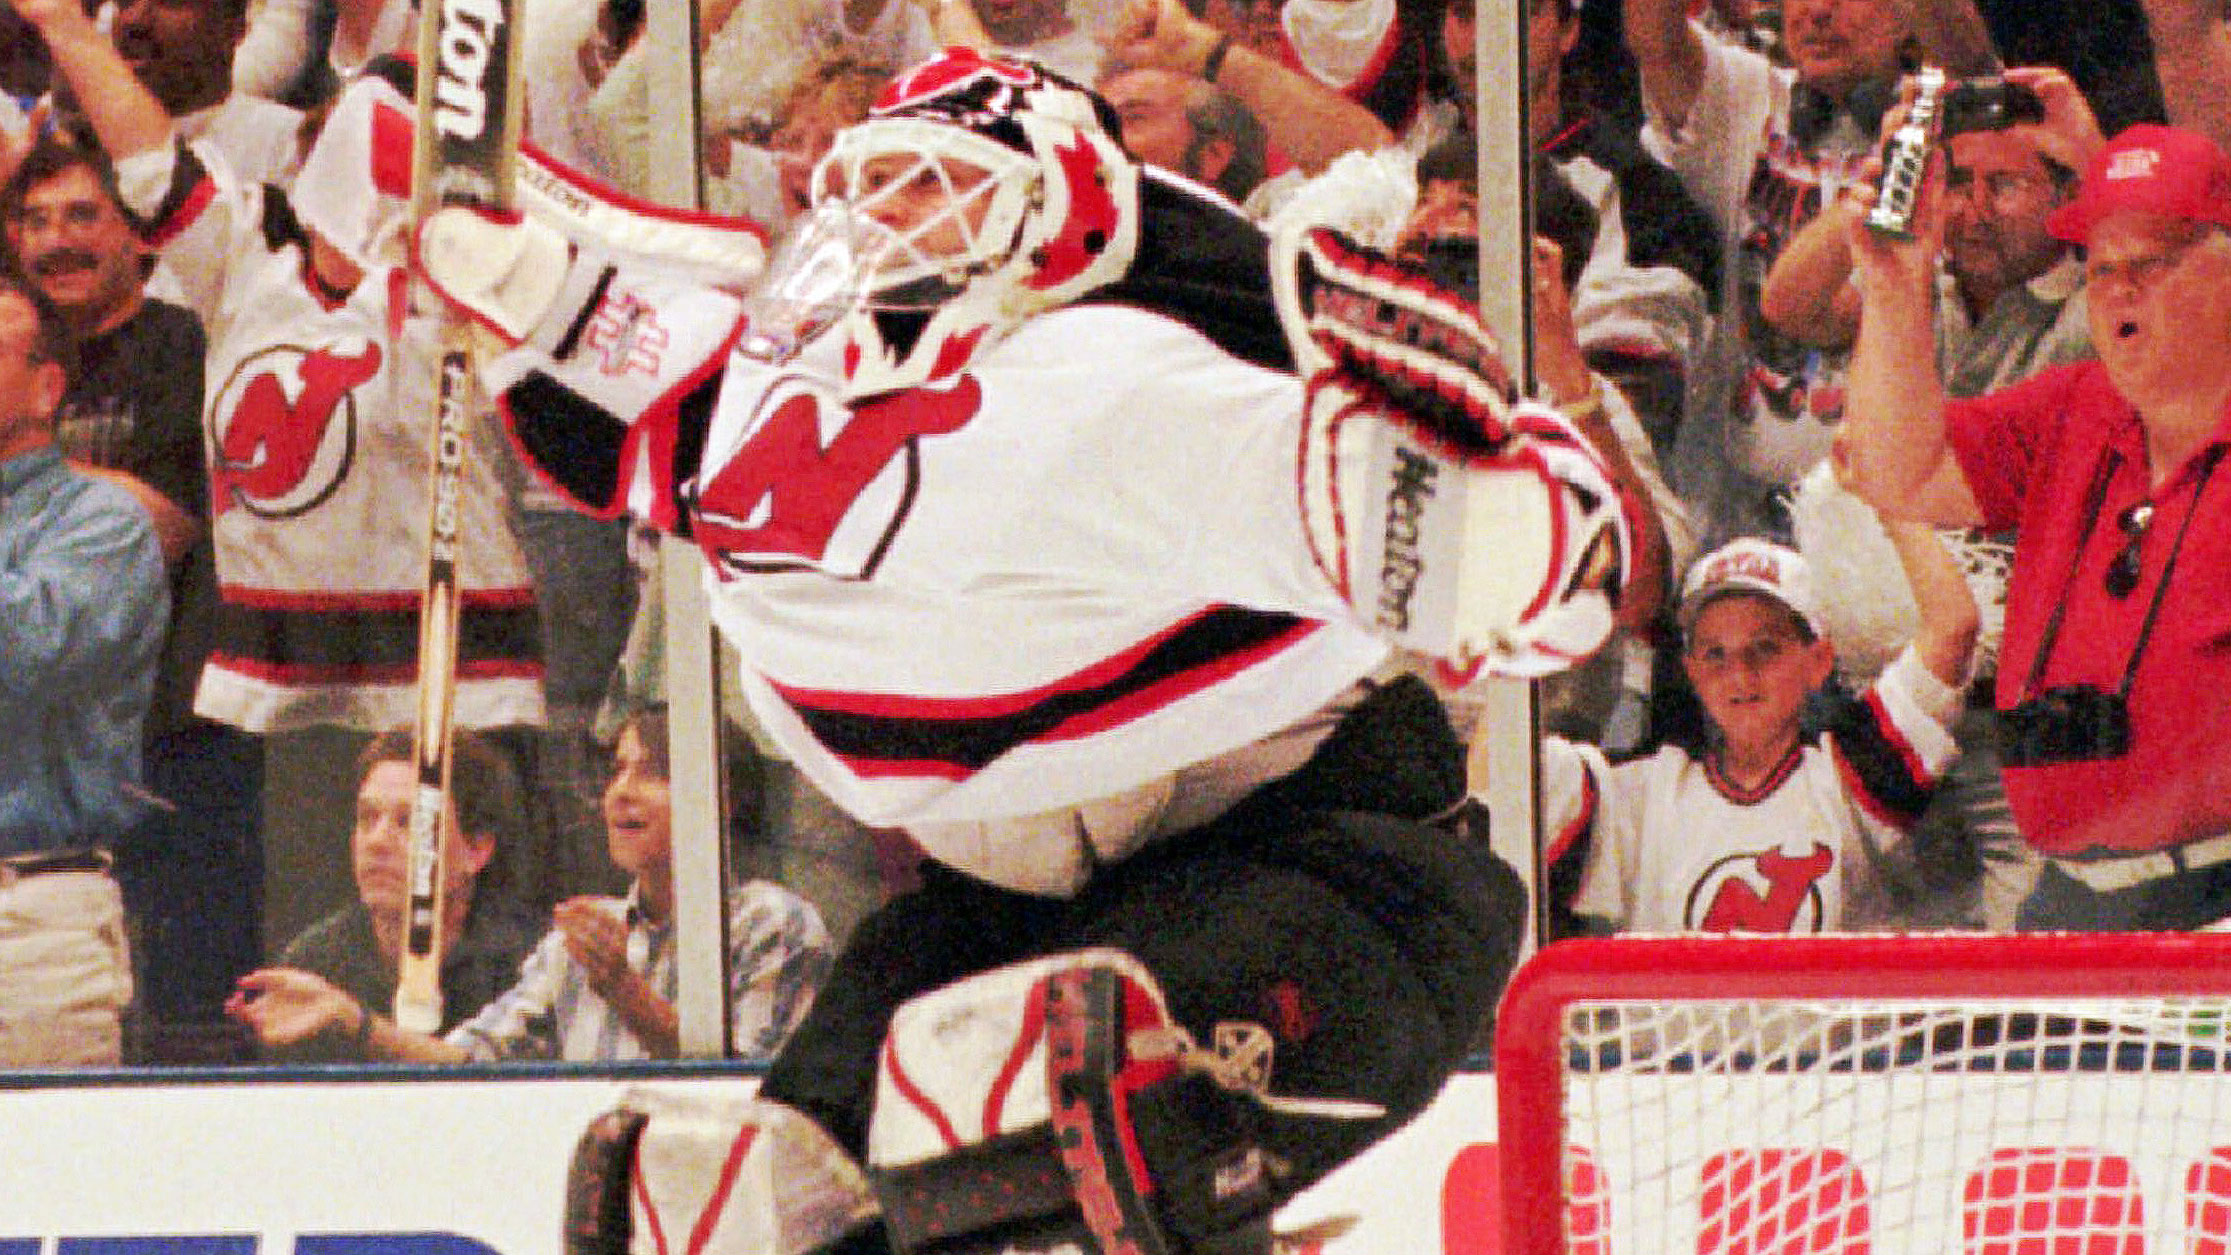 1994-95 champion Devils: An oral 